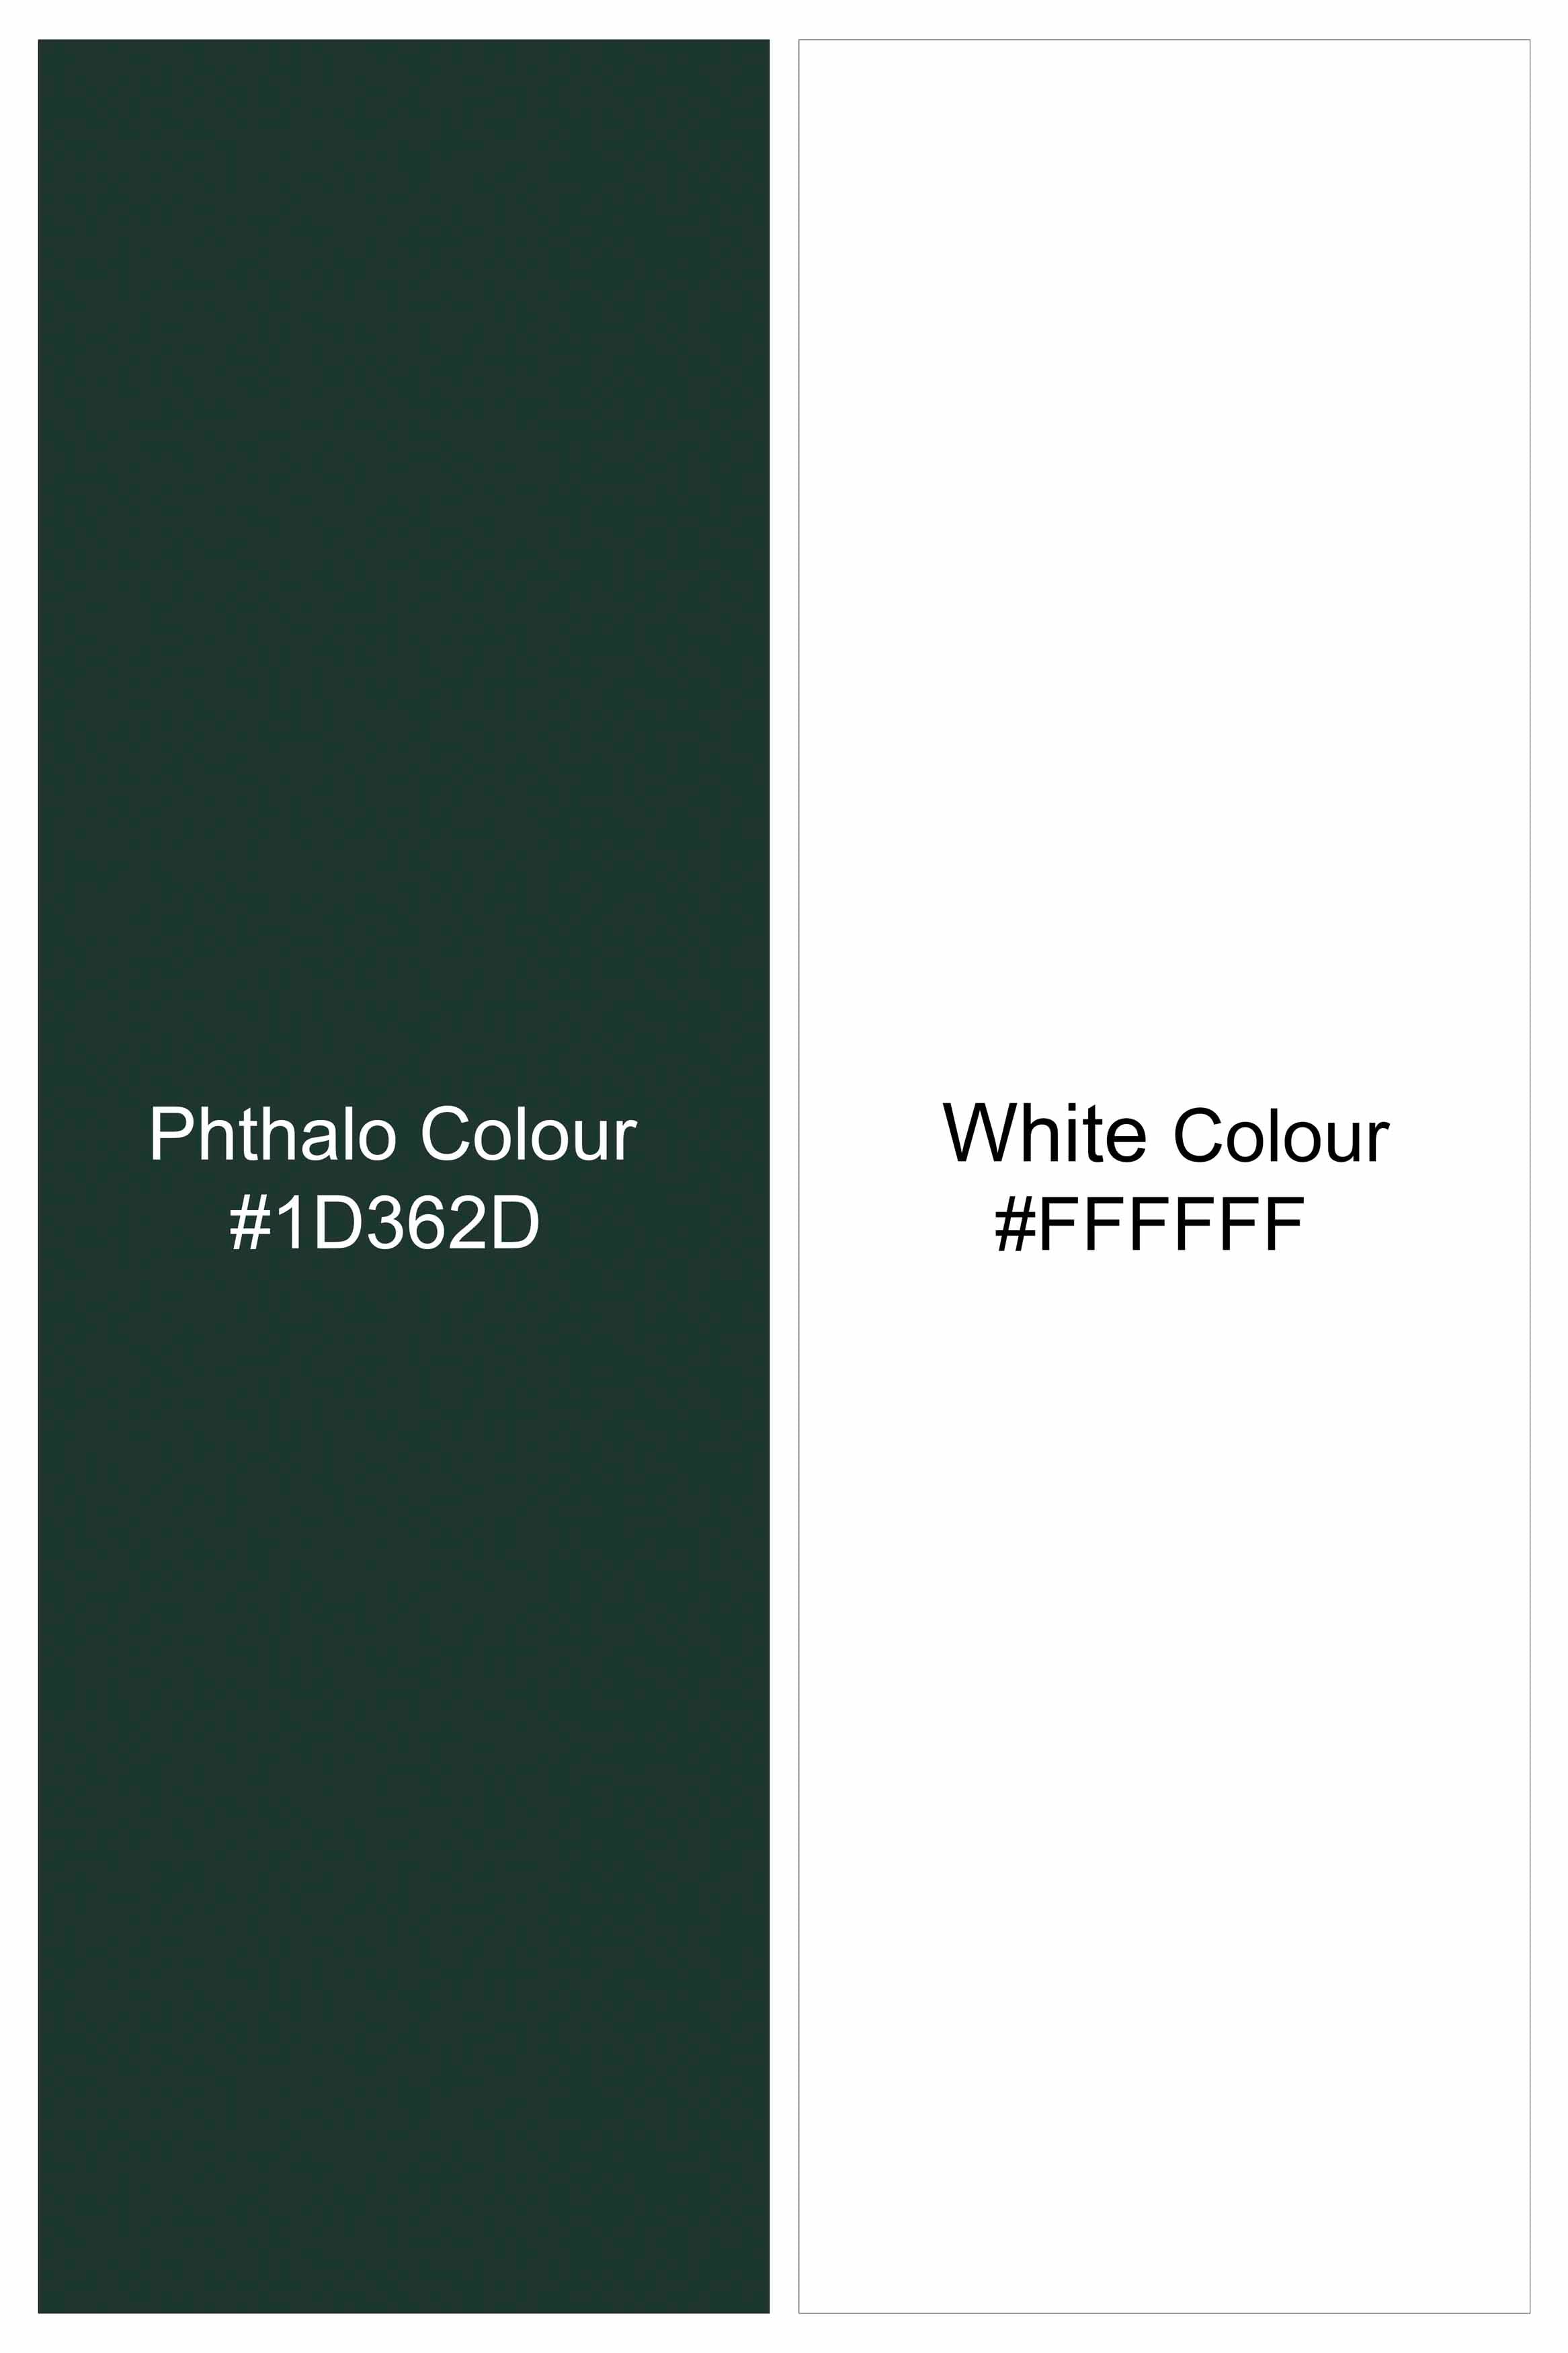 Phthalo Green with White Hand Painted Super Soft Premium Cotton Designer Shirt 6871-M-ART-38, 6871-M-ART-H-38, 6871-M-ART-39, 6871-M-ART-H-39, 6871-M-ART-40, 6871-M-ART-H-40, 6871-M-ART-42, 6871-M-ART-H-42, 6871-M-ART-44, 6871-M-ART-H-44, 6871-M-ART-46, 6871-M-ART-H-46, 6871-M-ART-48, 6871-M-ART-H-48, 6871-M-ART-50, 6871-M-ART-H-50, 6871-M-ART-52, 6871-M-ART-H-52